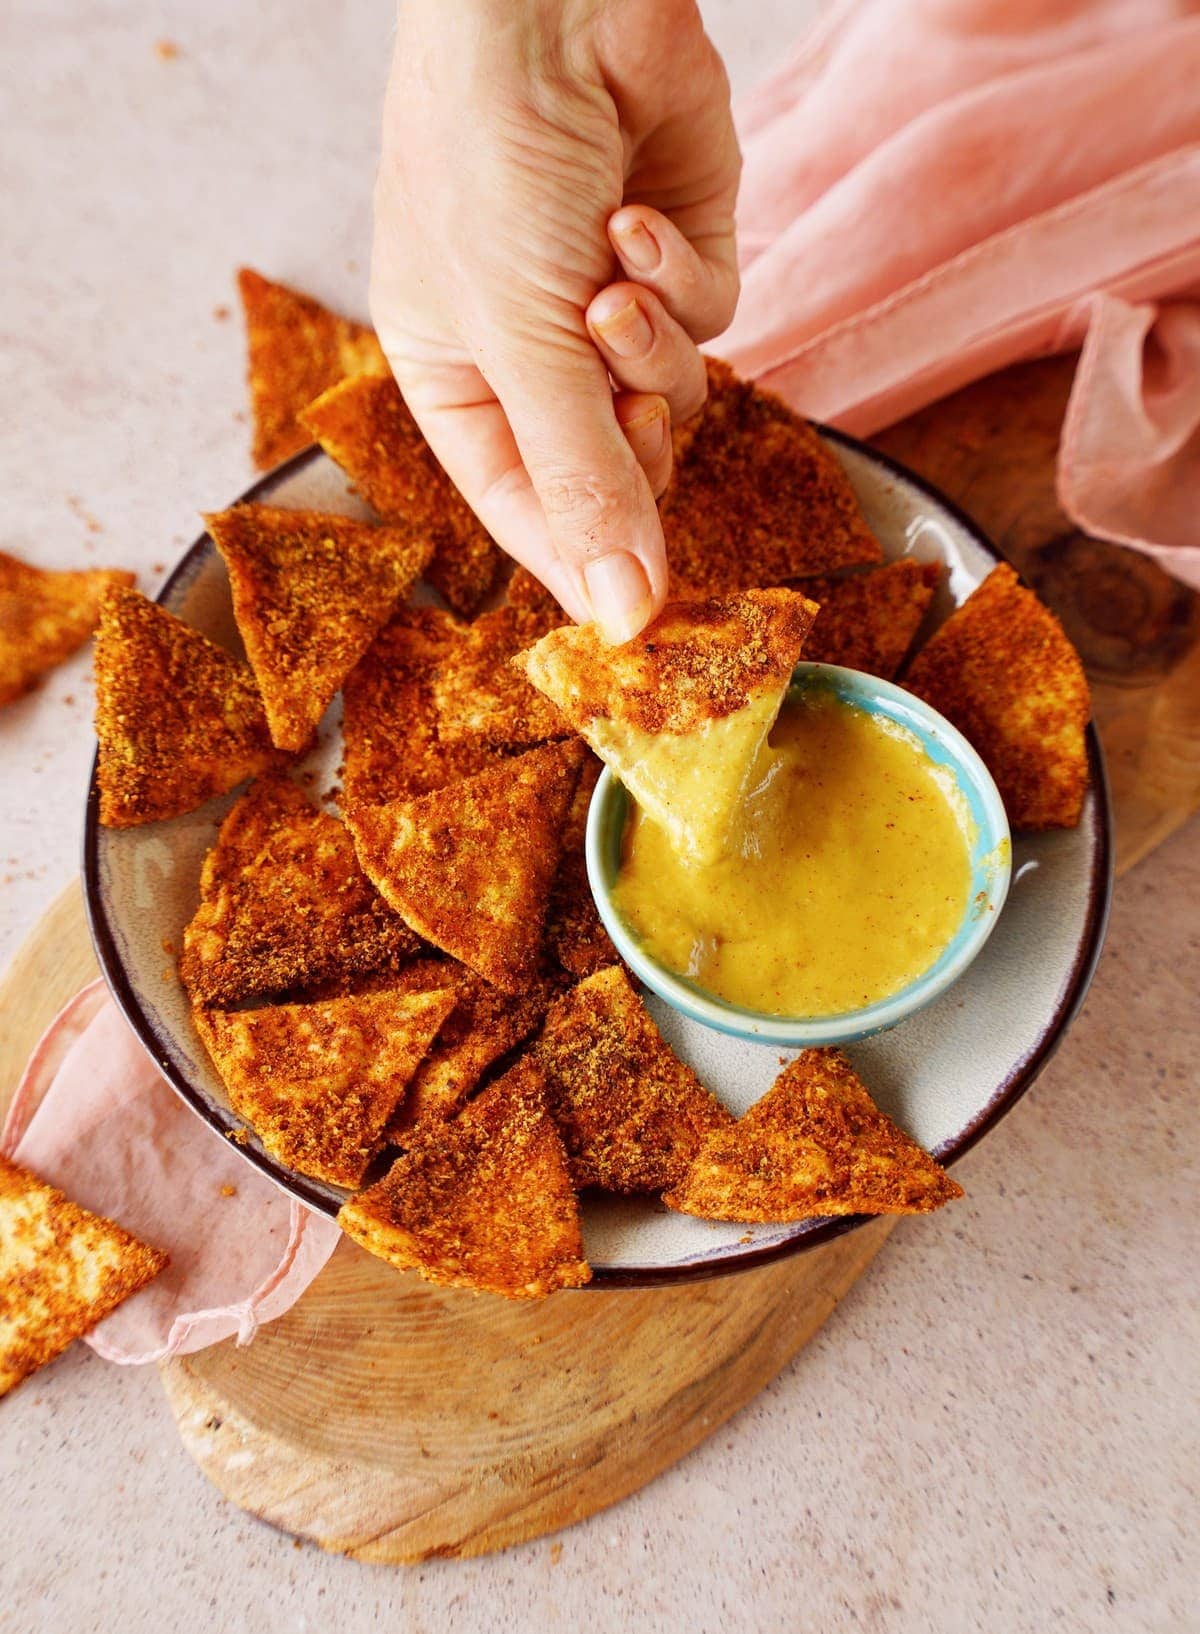 hand grabbing a homemade dorito tortilla chip dipped in nacho cheese